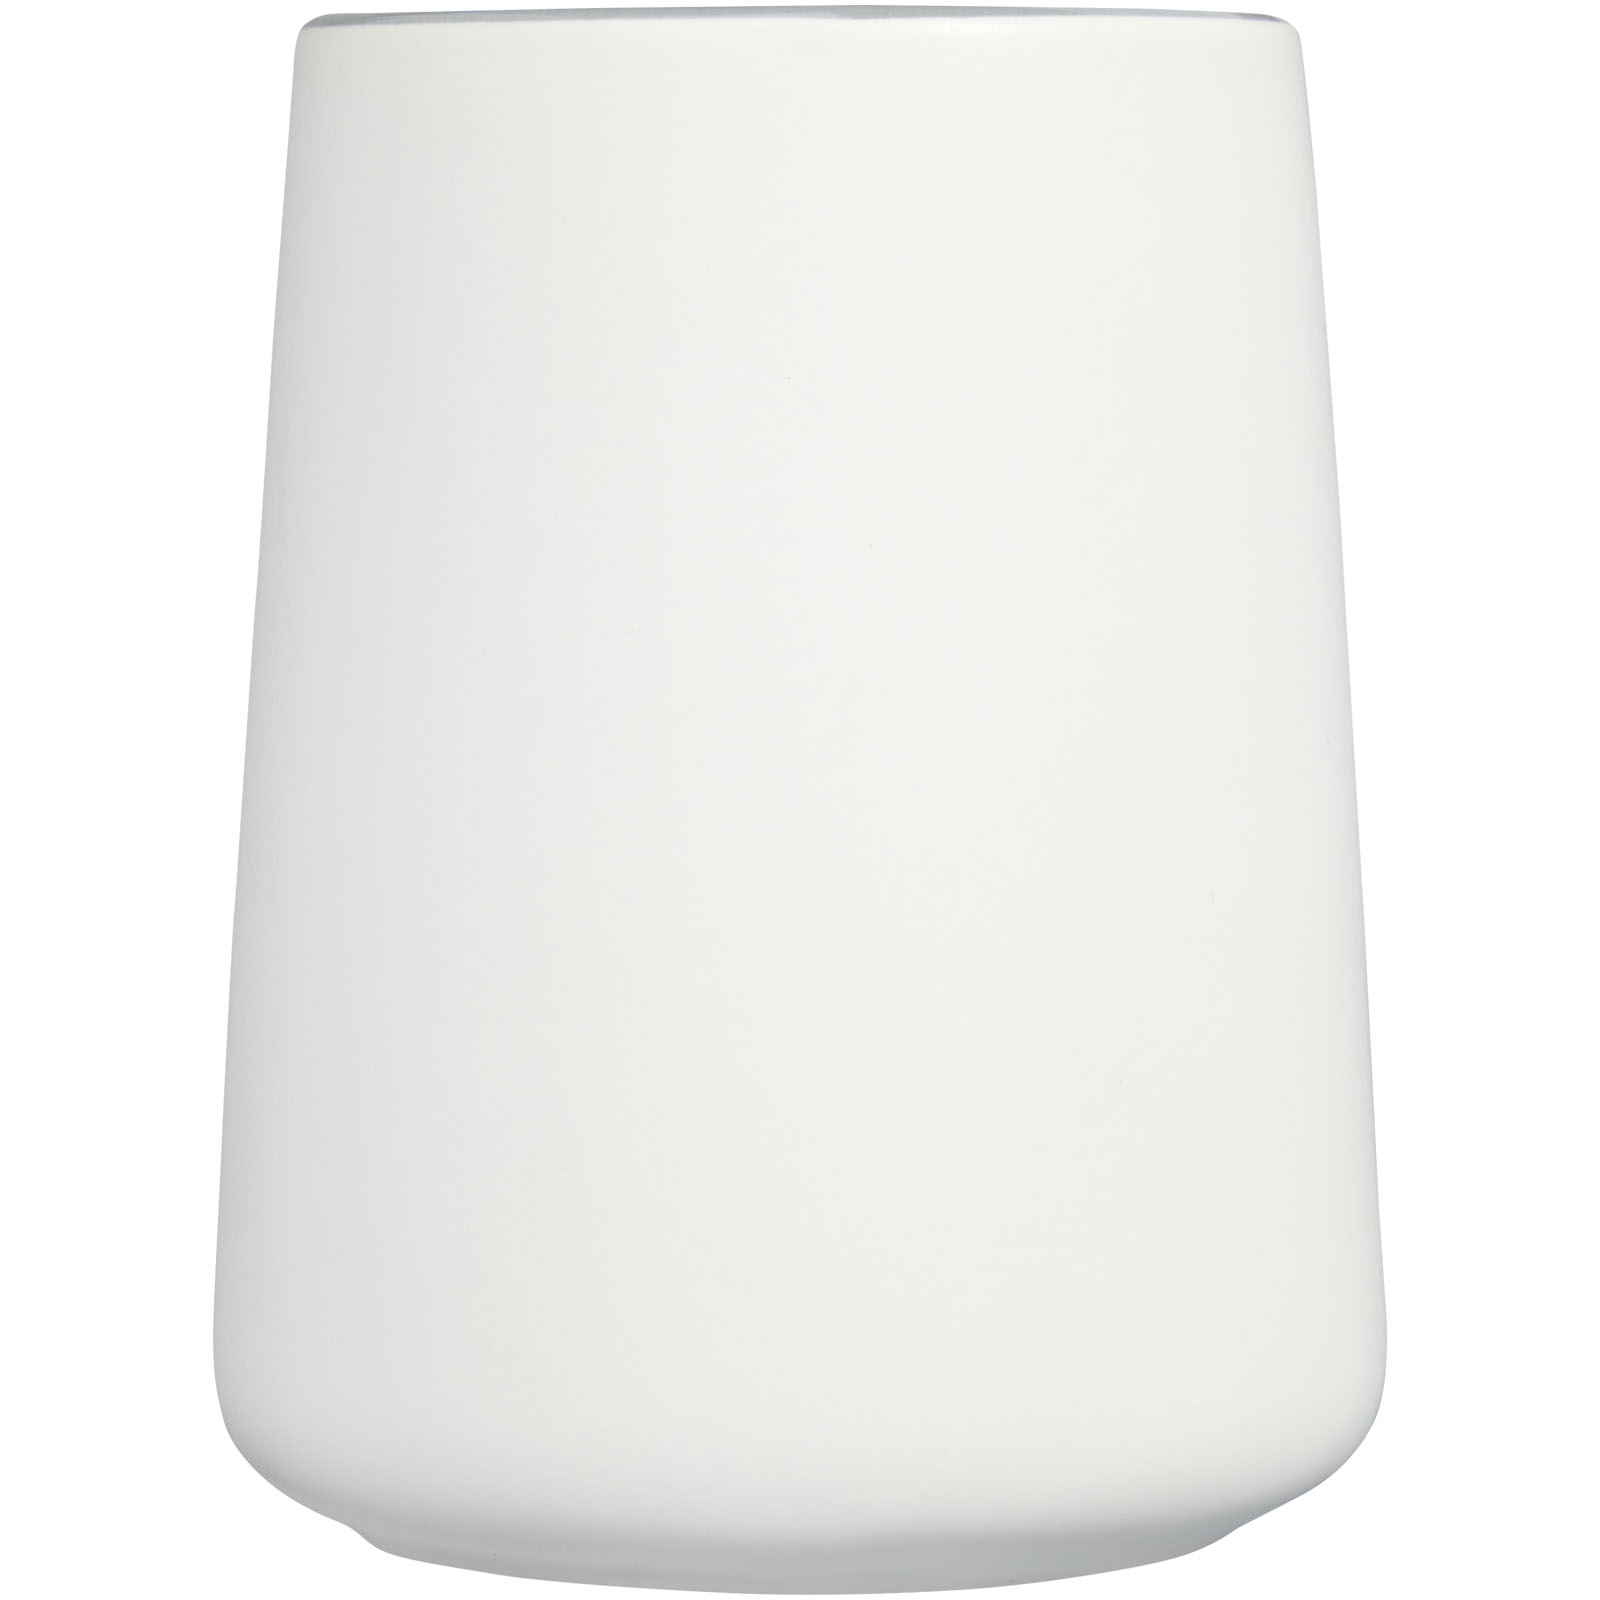 Mugs standard publicitaires - Mug Joe de 450 ml en céramique  - 1